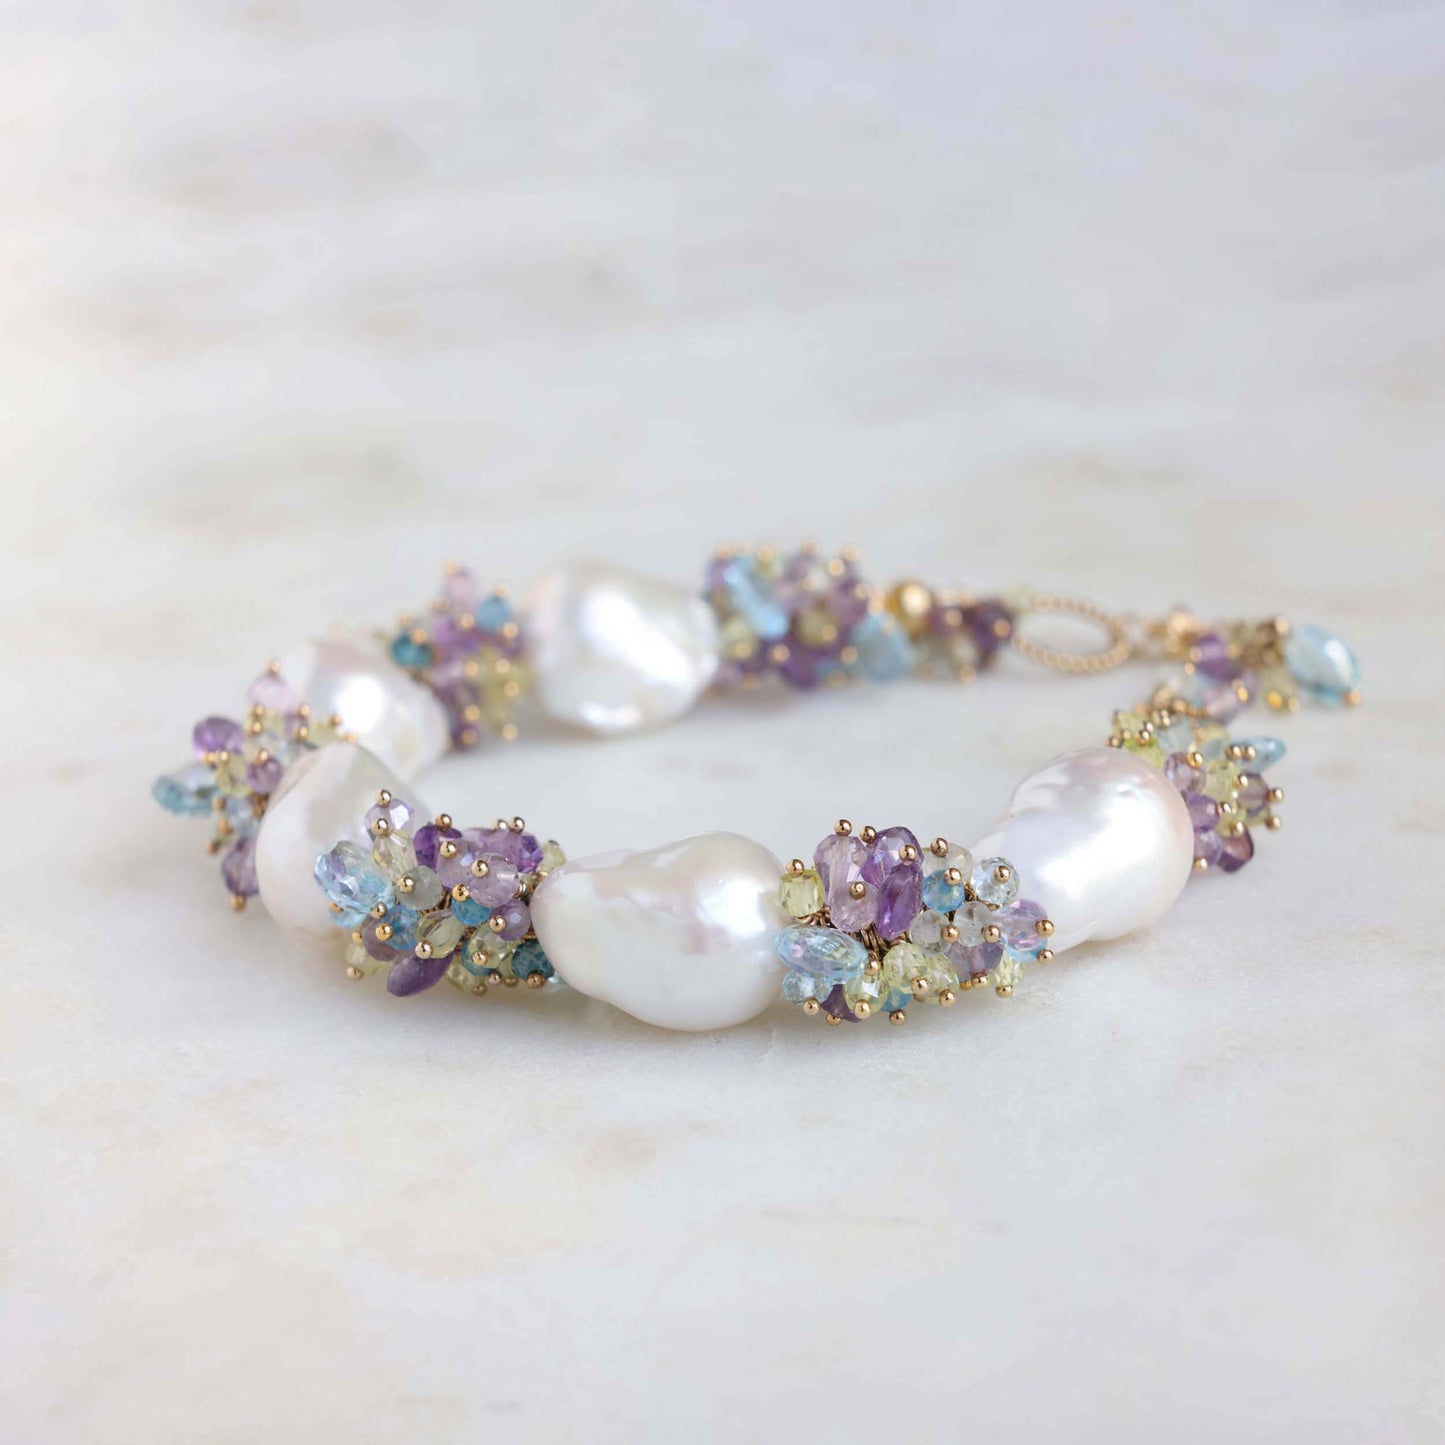 baroque pearl and gemstone bracelet. Gemstones include blue topaz, amethyst, lemon quartz